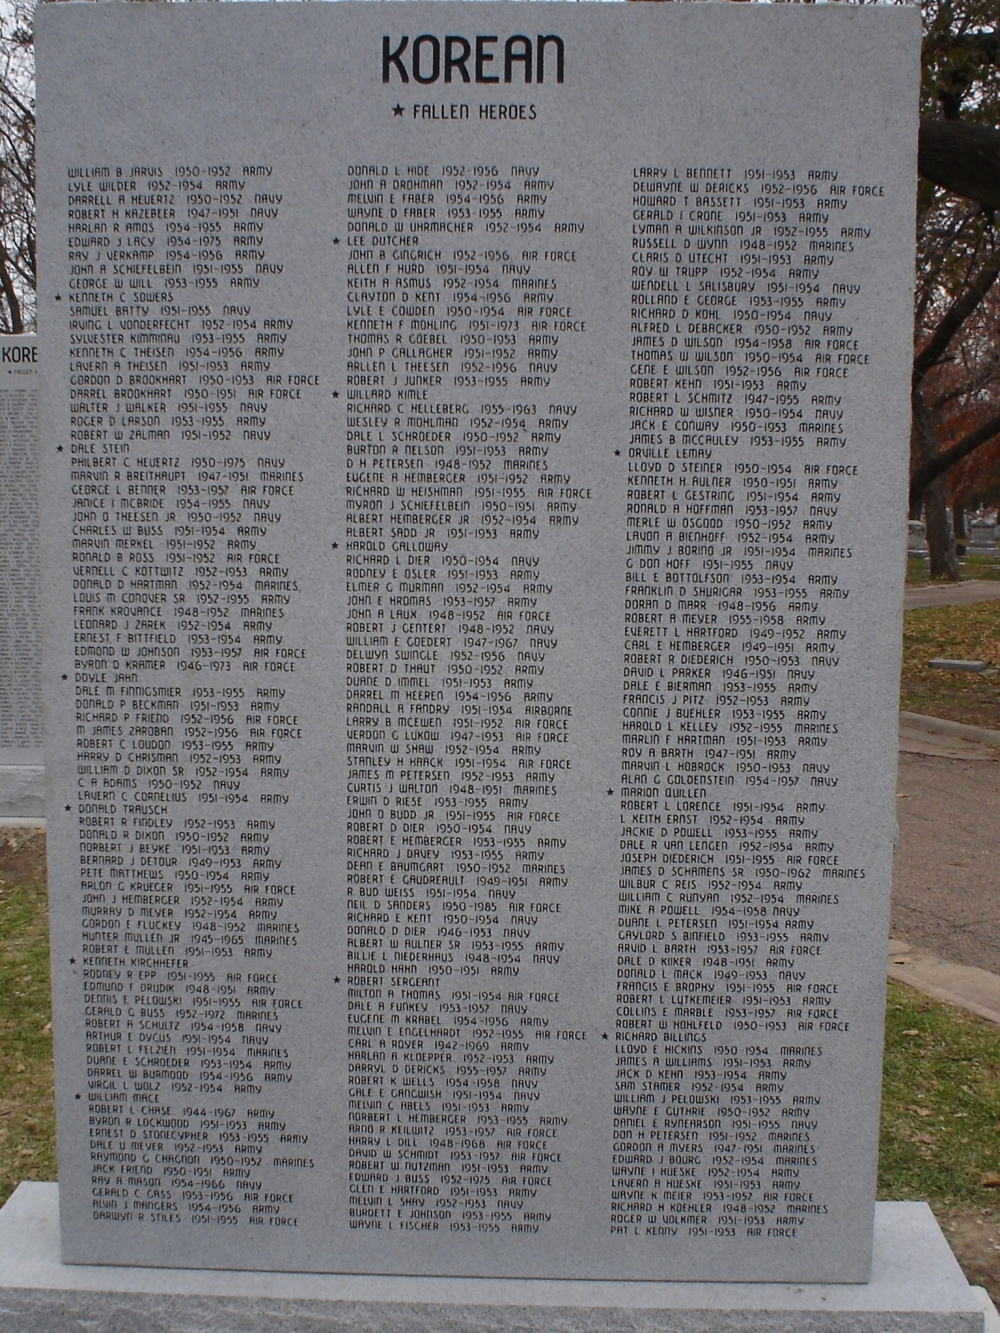 Adams County Veterans Monument